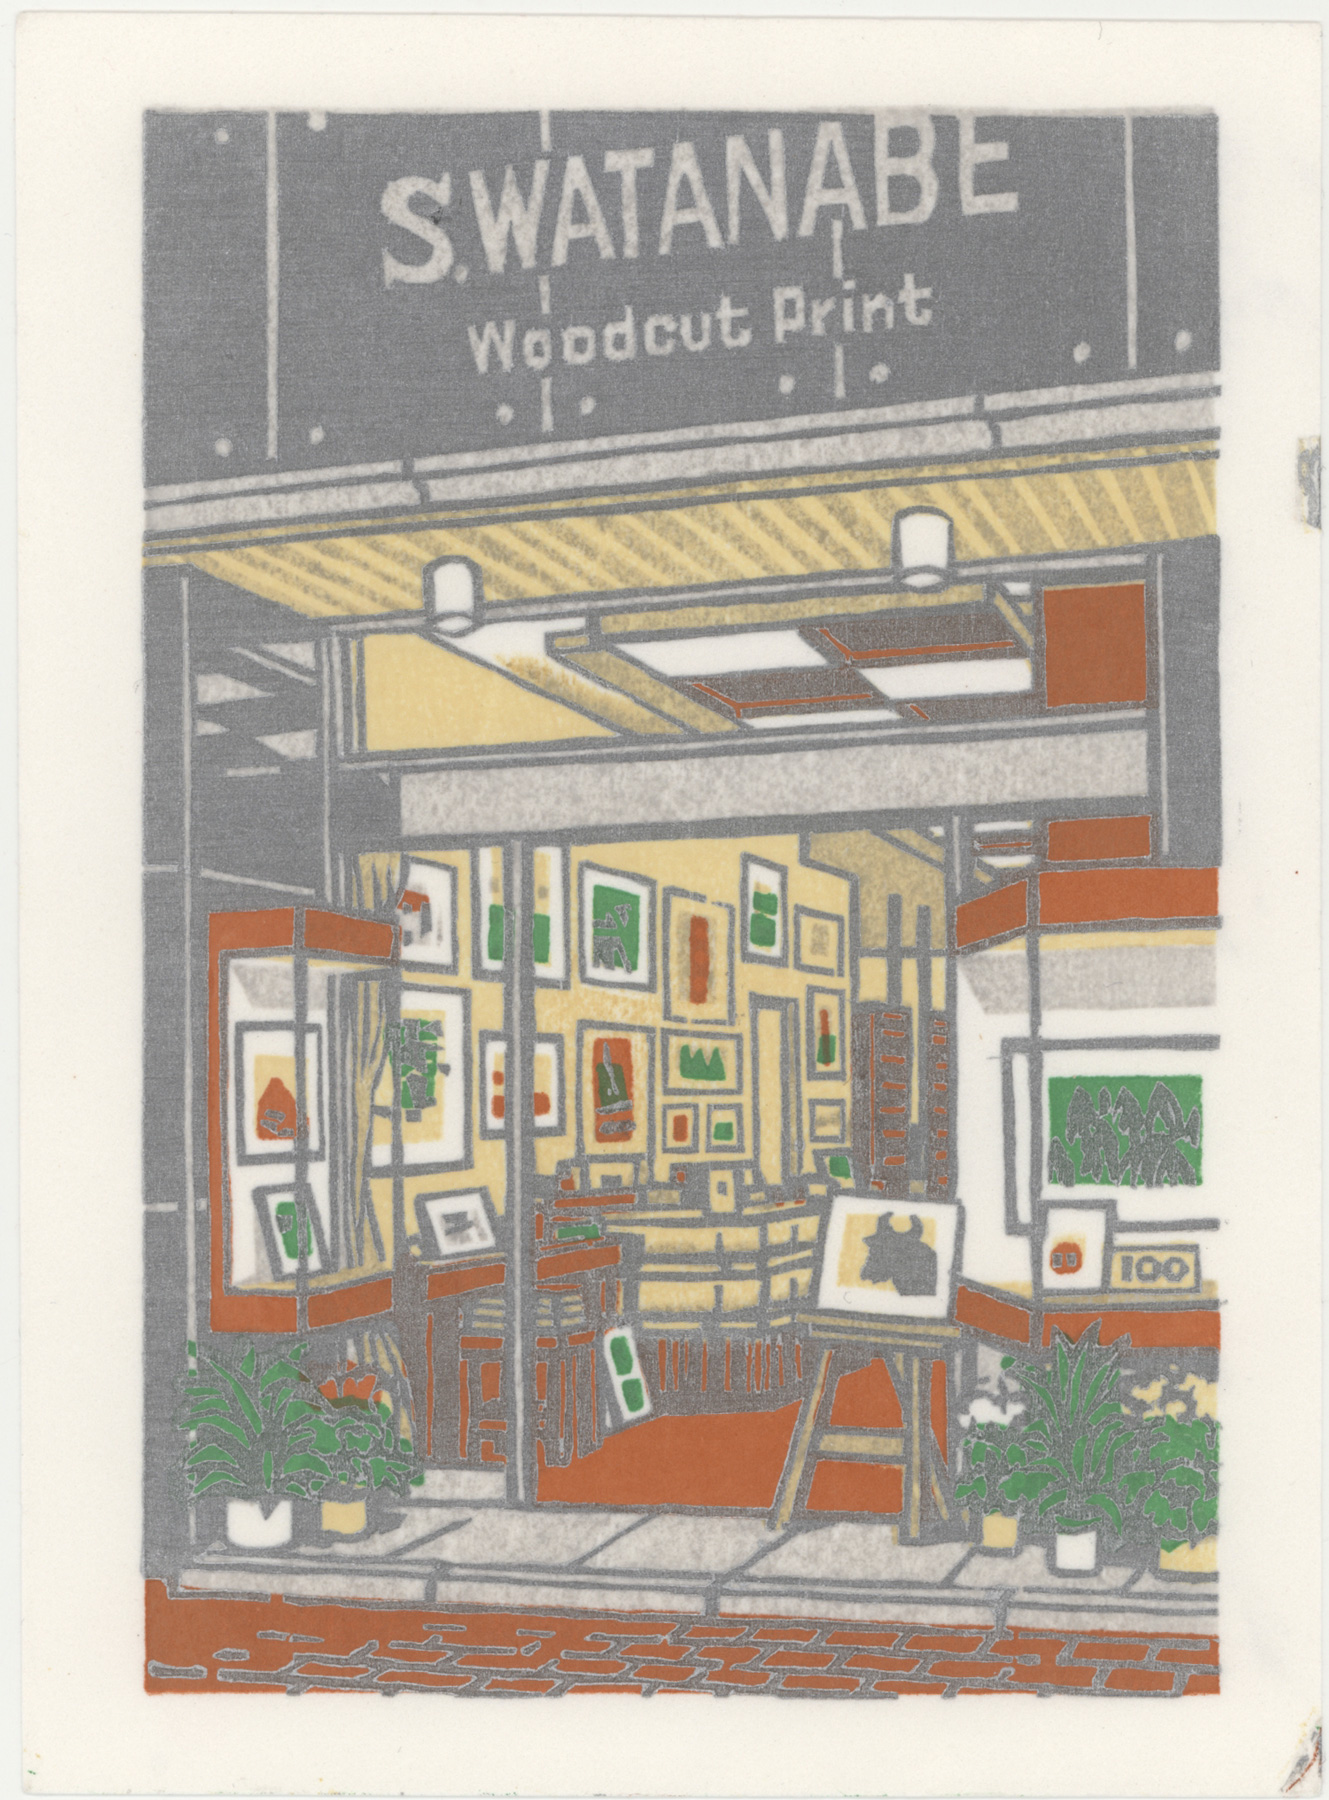 S. Watanabe Woodcut Print Shop